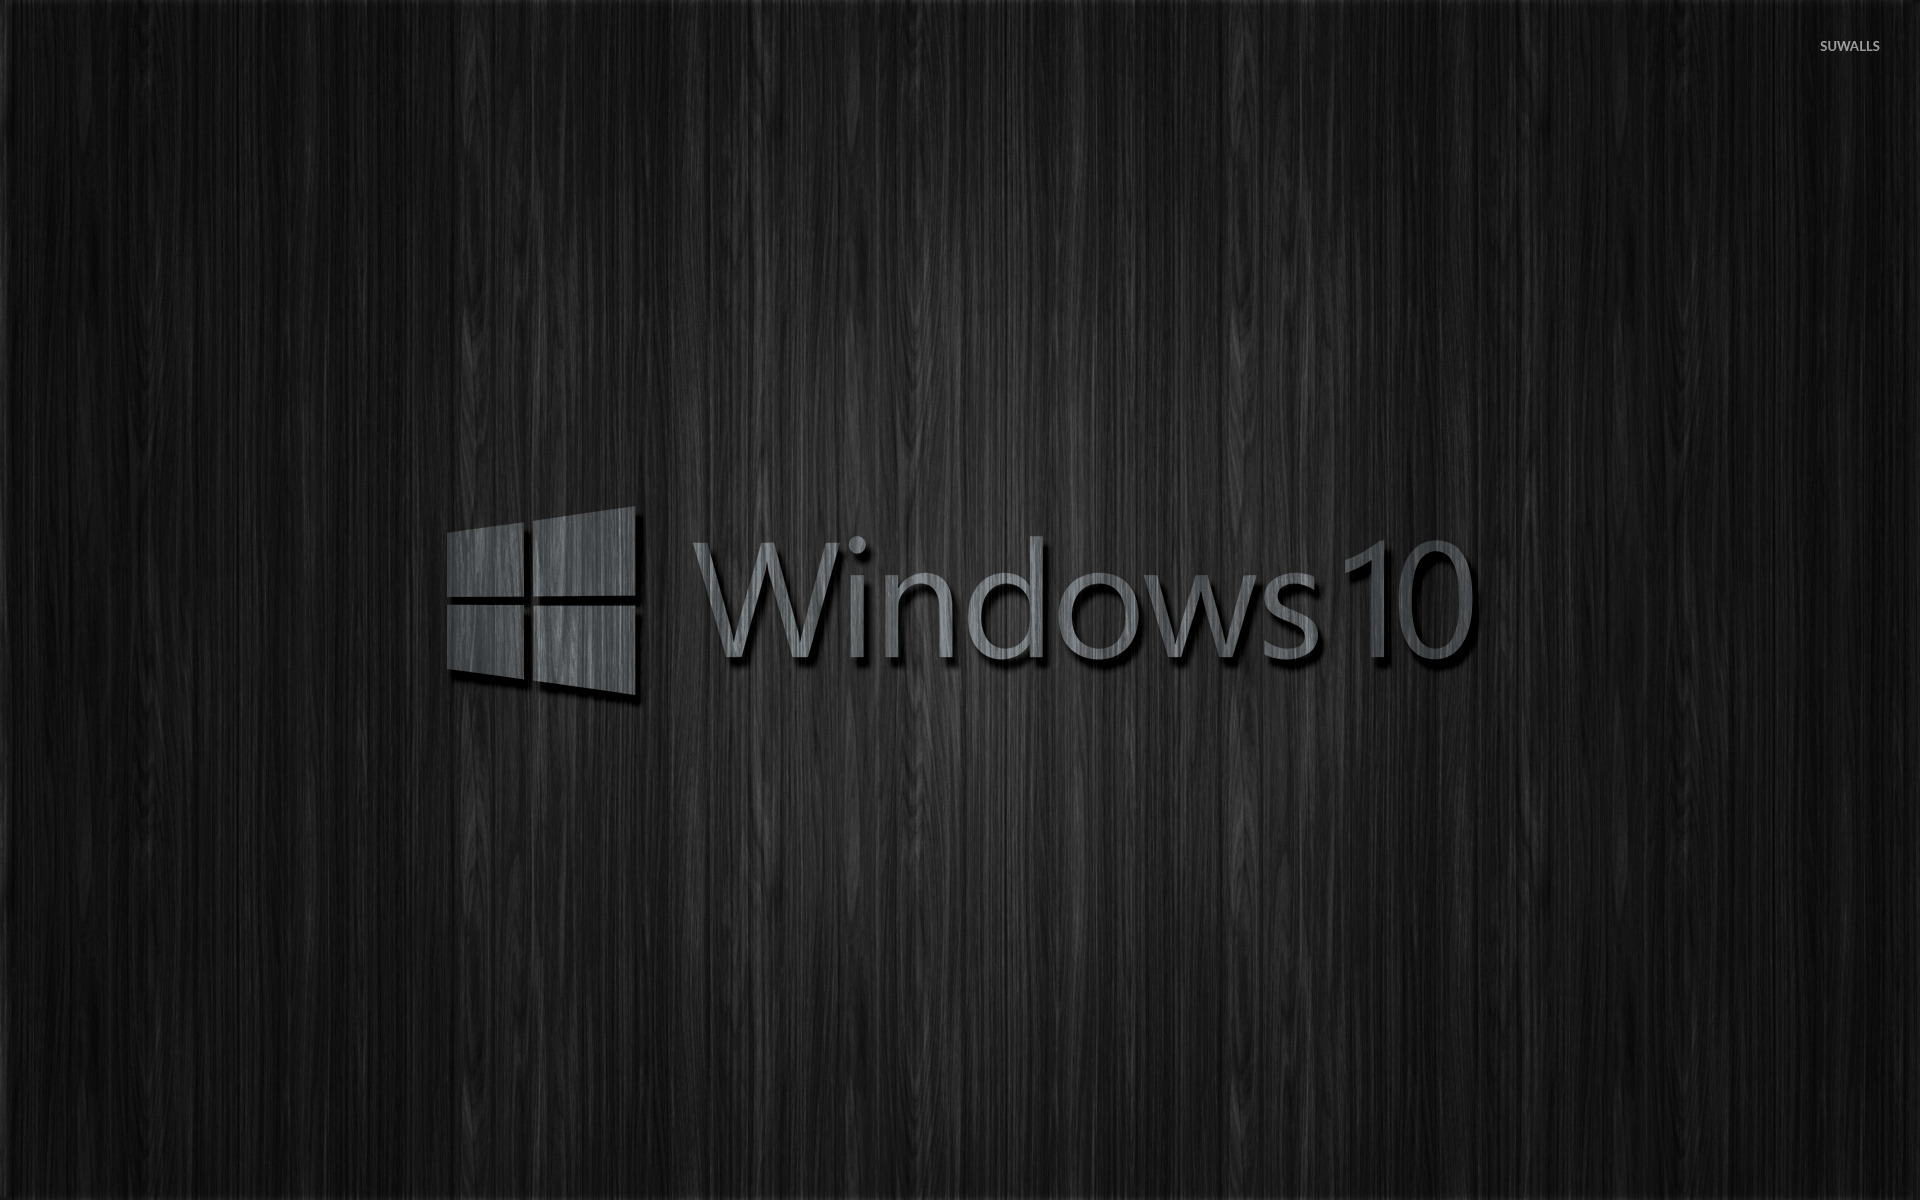 Windows 10 transparent text logo on dark wood wallpaper - Computer